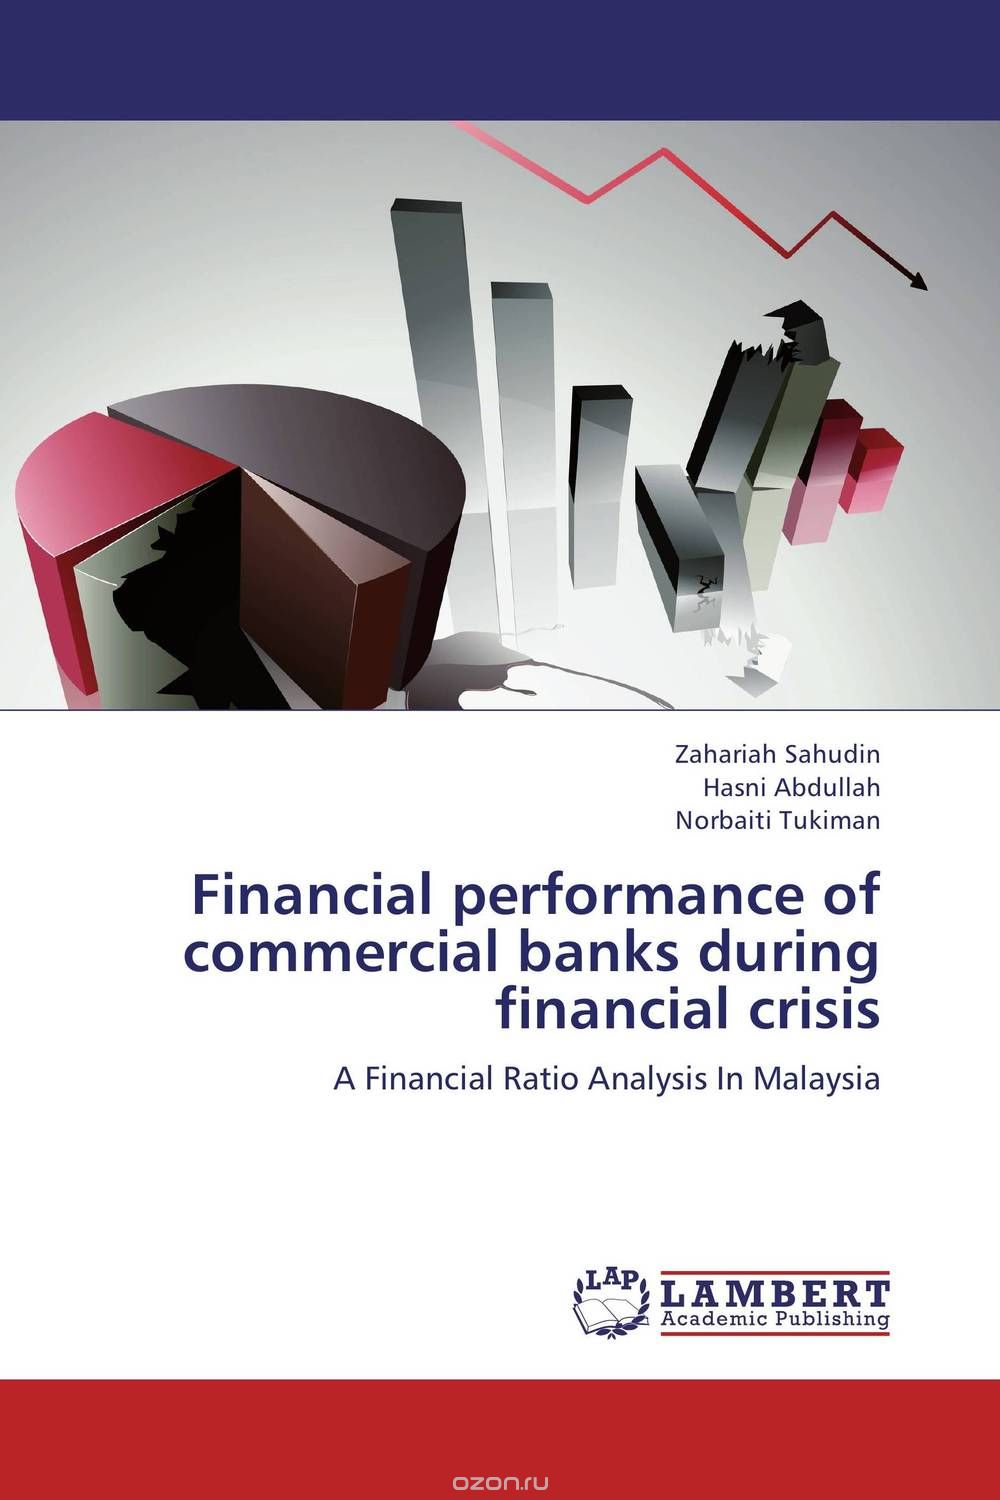 Скачать книгу "Financial performance of commercial banks during financial crisis"